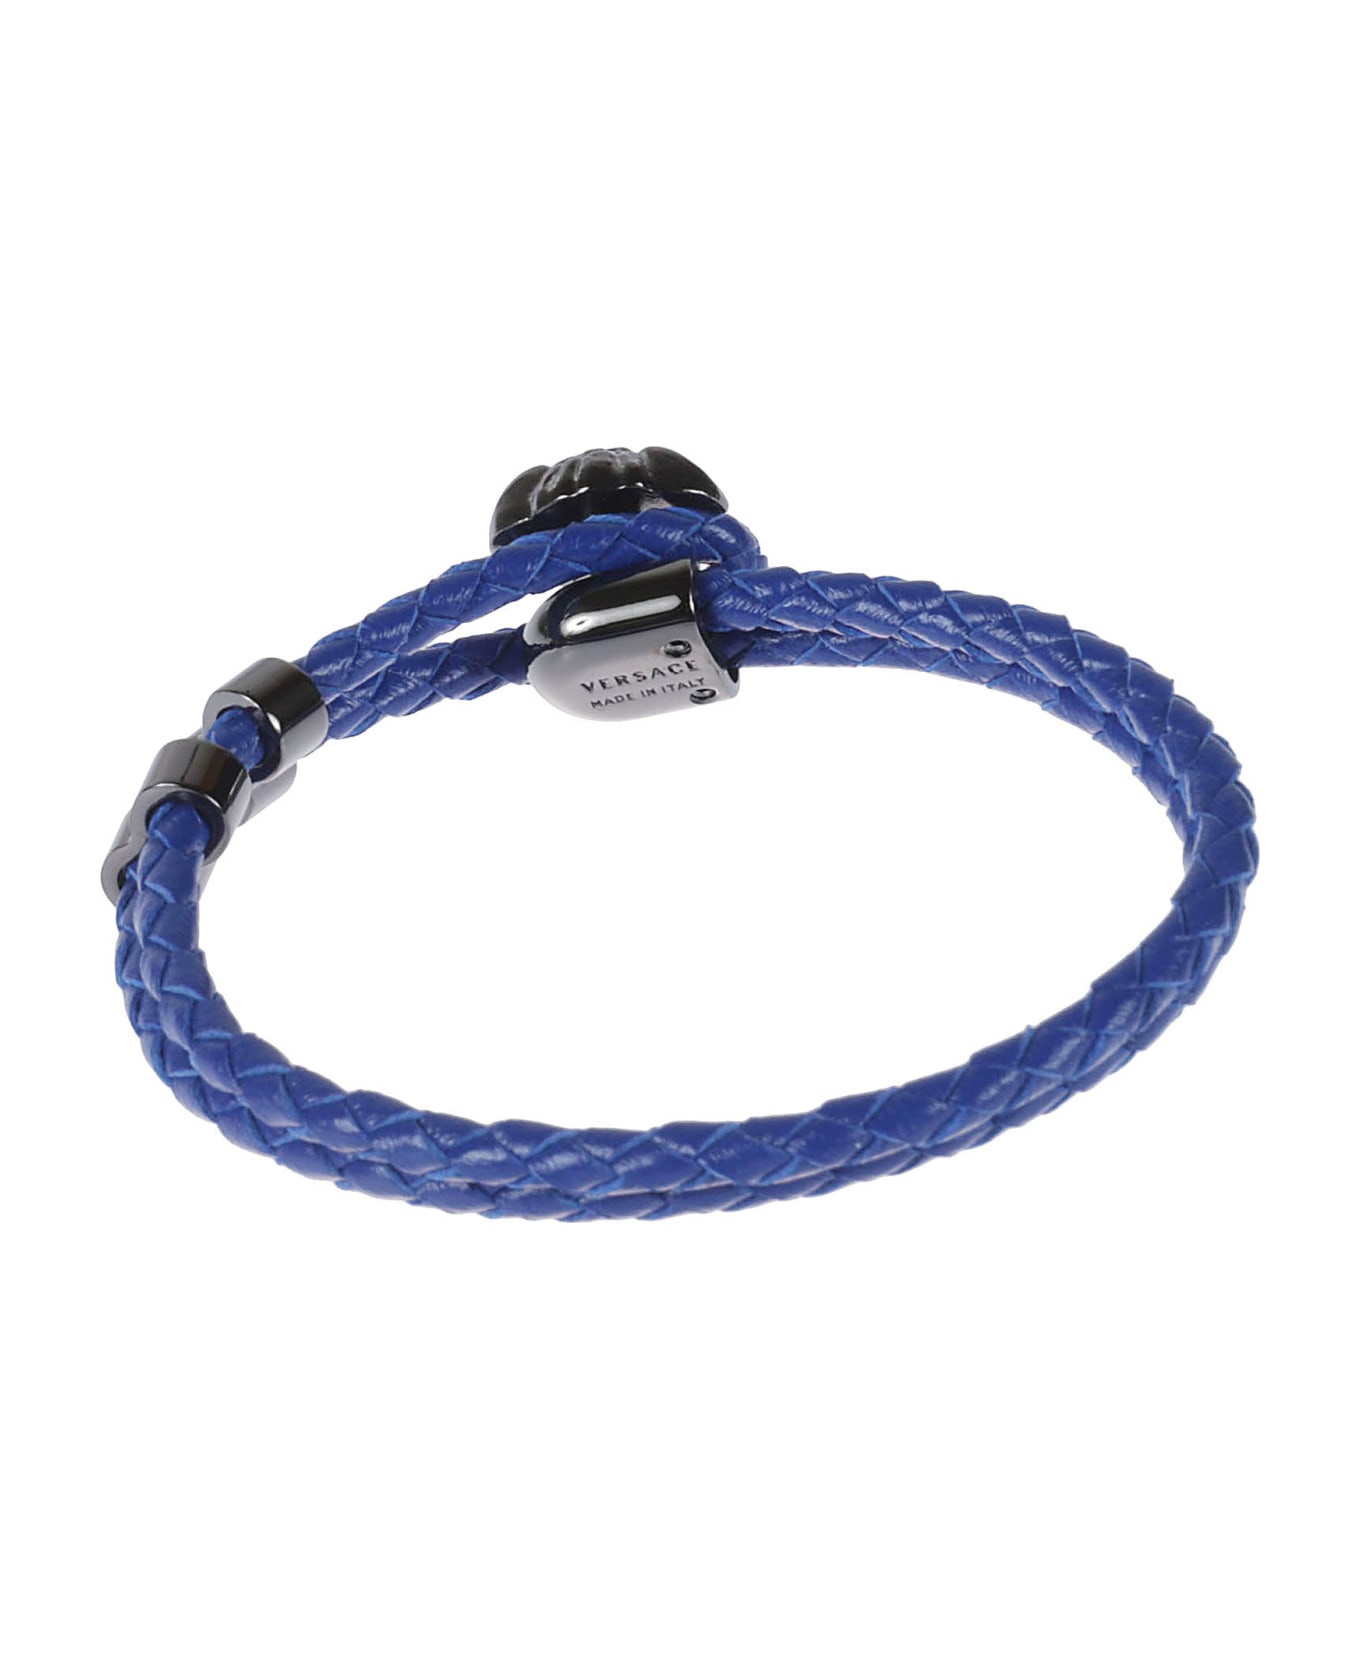 Versace Medusa Bracelet - Cobalt